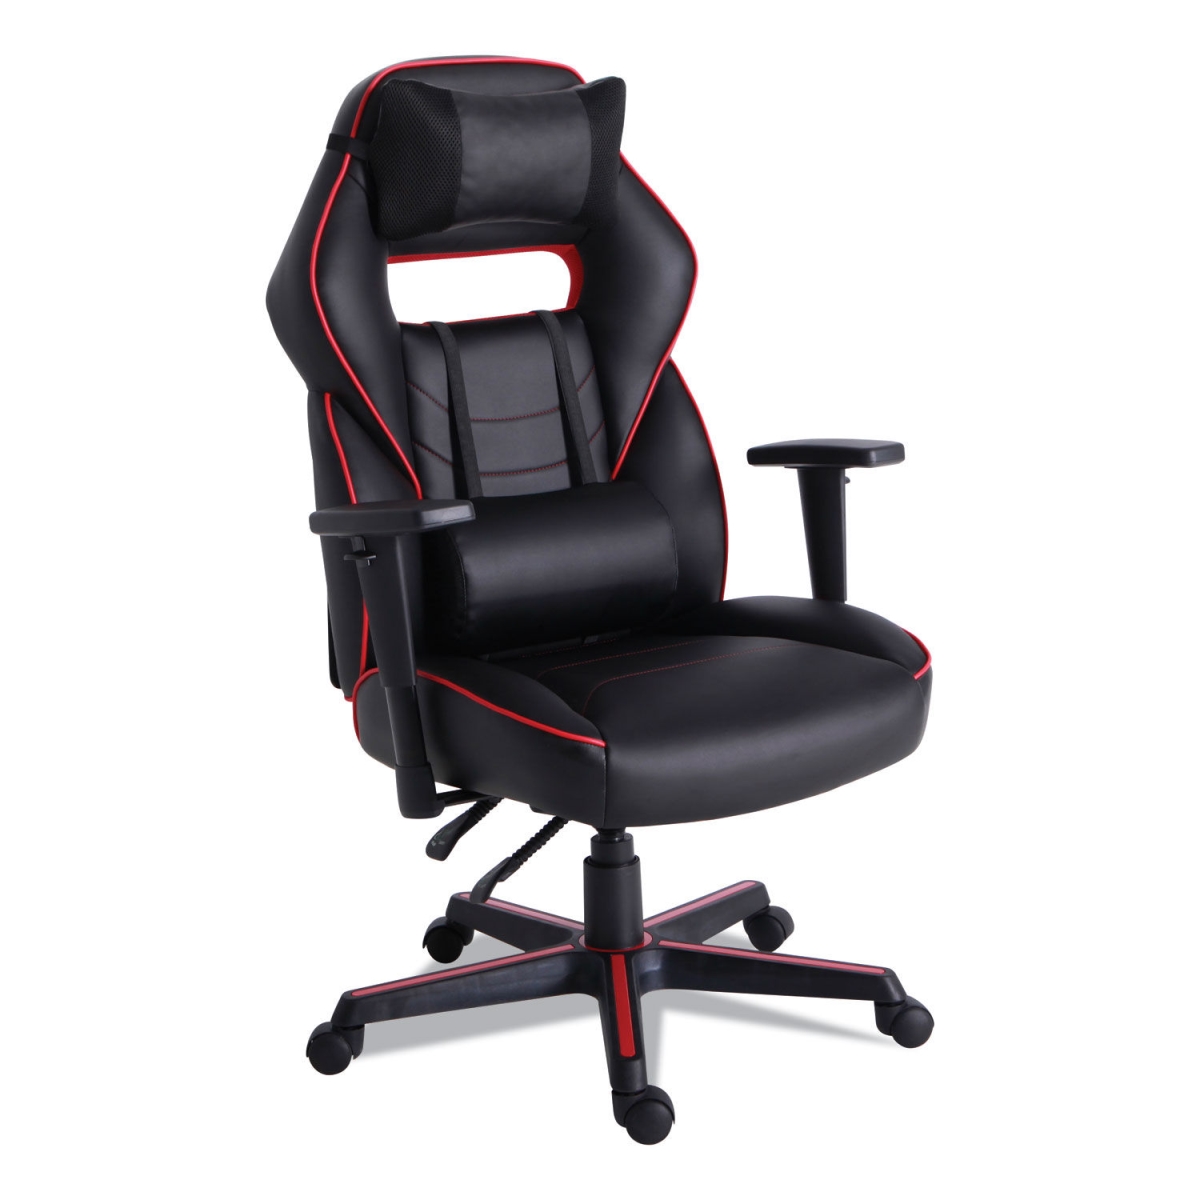 UPC 042167000035 product image for Alera ALEGM4136 Racing Style Ergonomic Gaming Chair, Black & Red Trim - 15.9 | upcitemdb.com